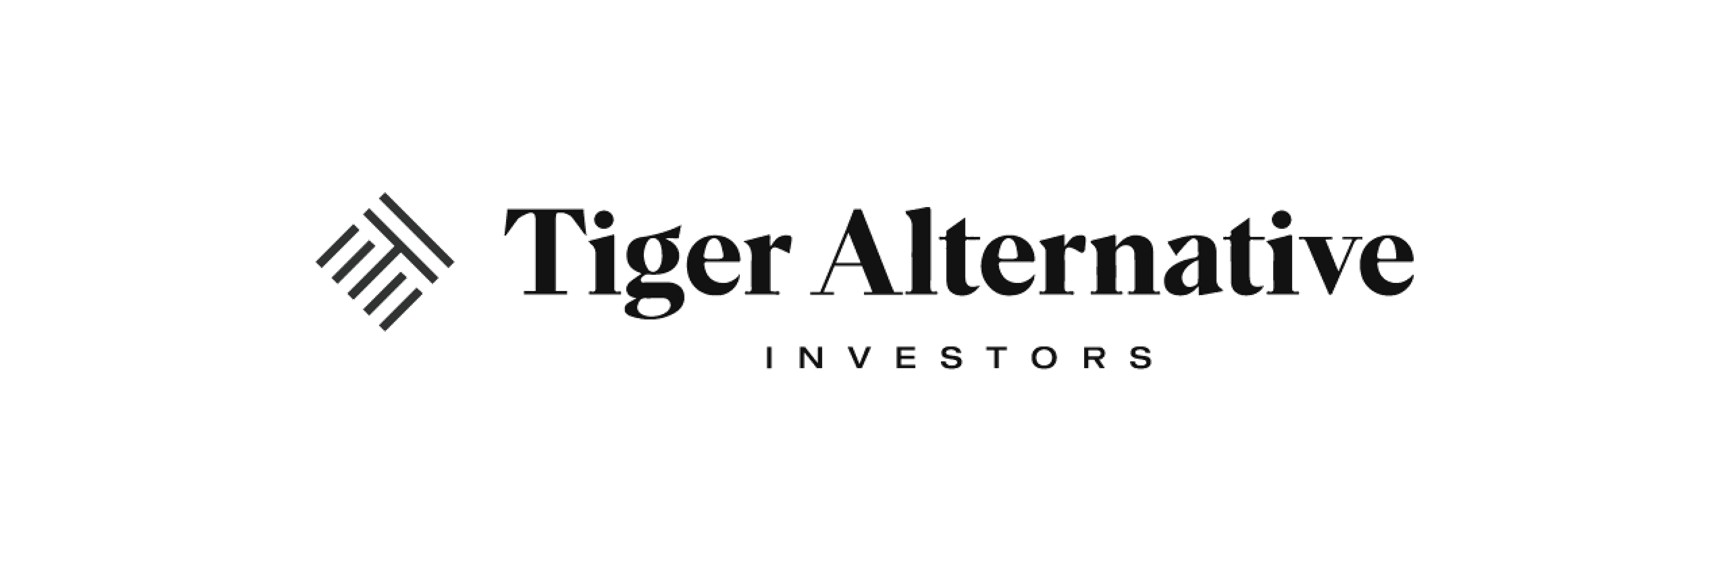 Tiger Alternative Investors Co., Ltd